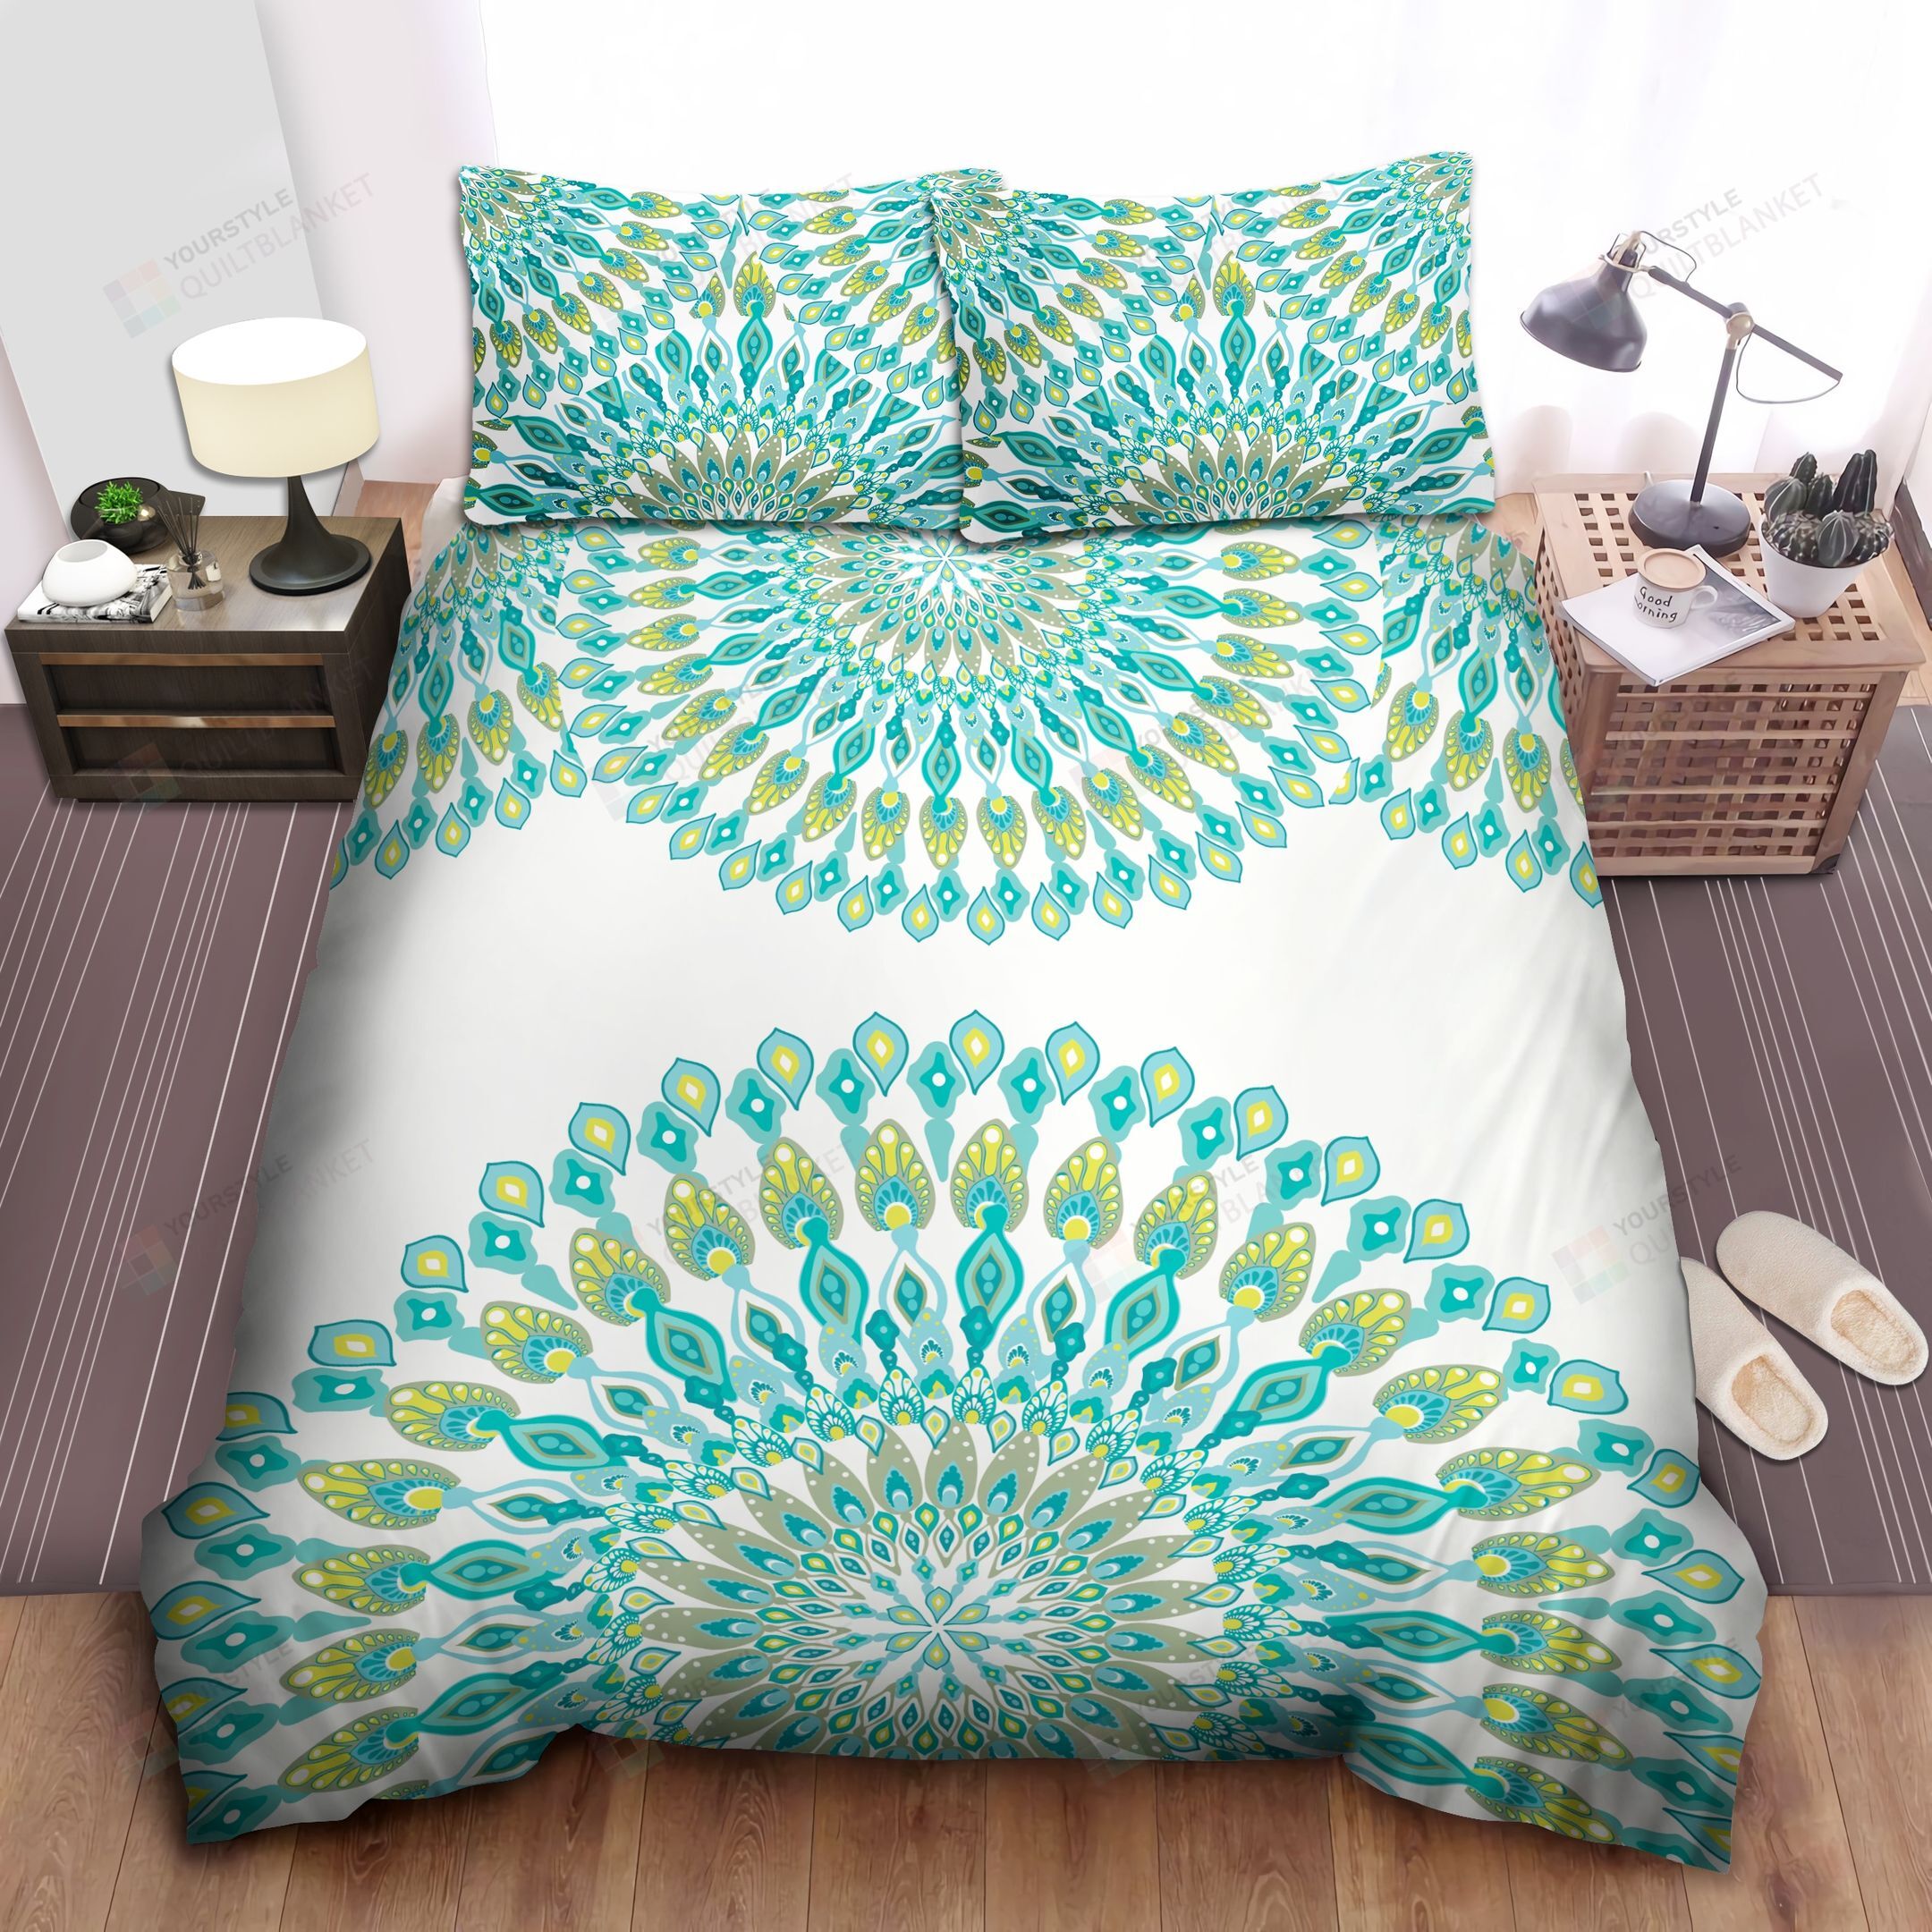 Monika Cotton Bed Sheets Spread Comforter Duvet Cover Bedding Sets